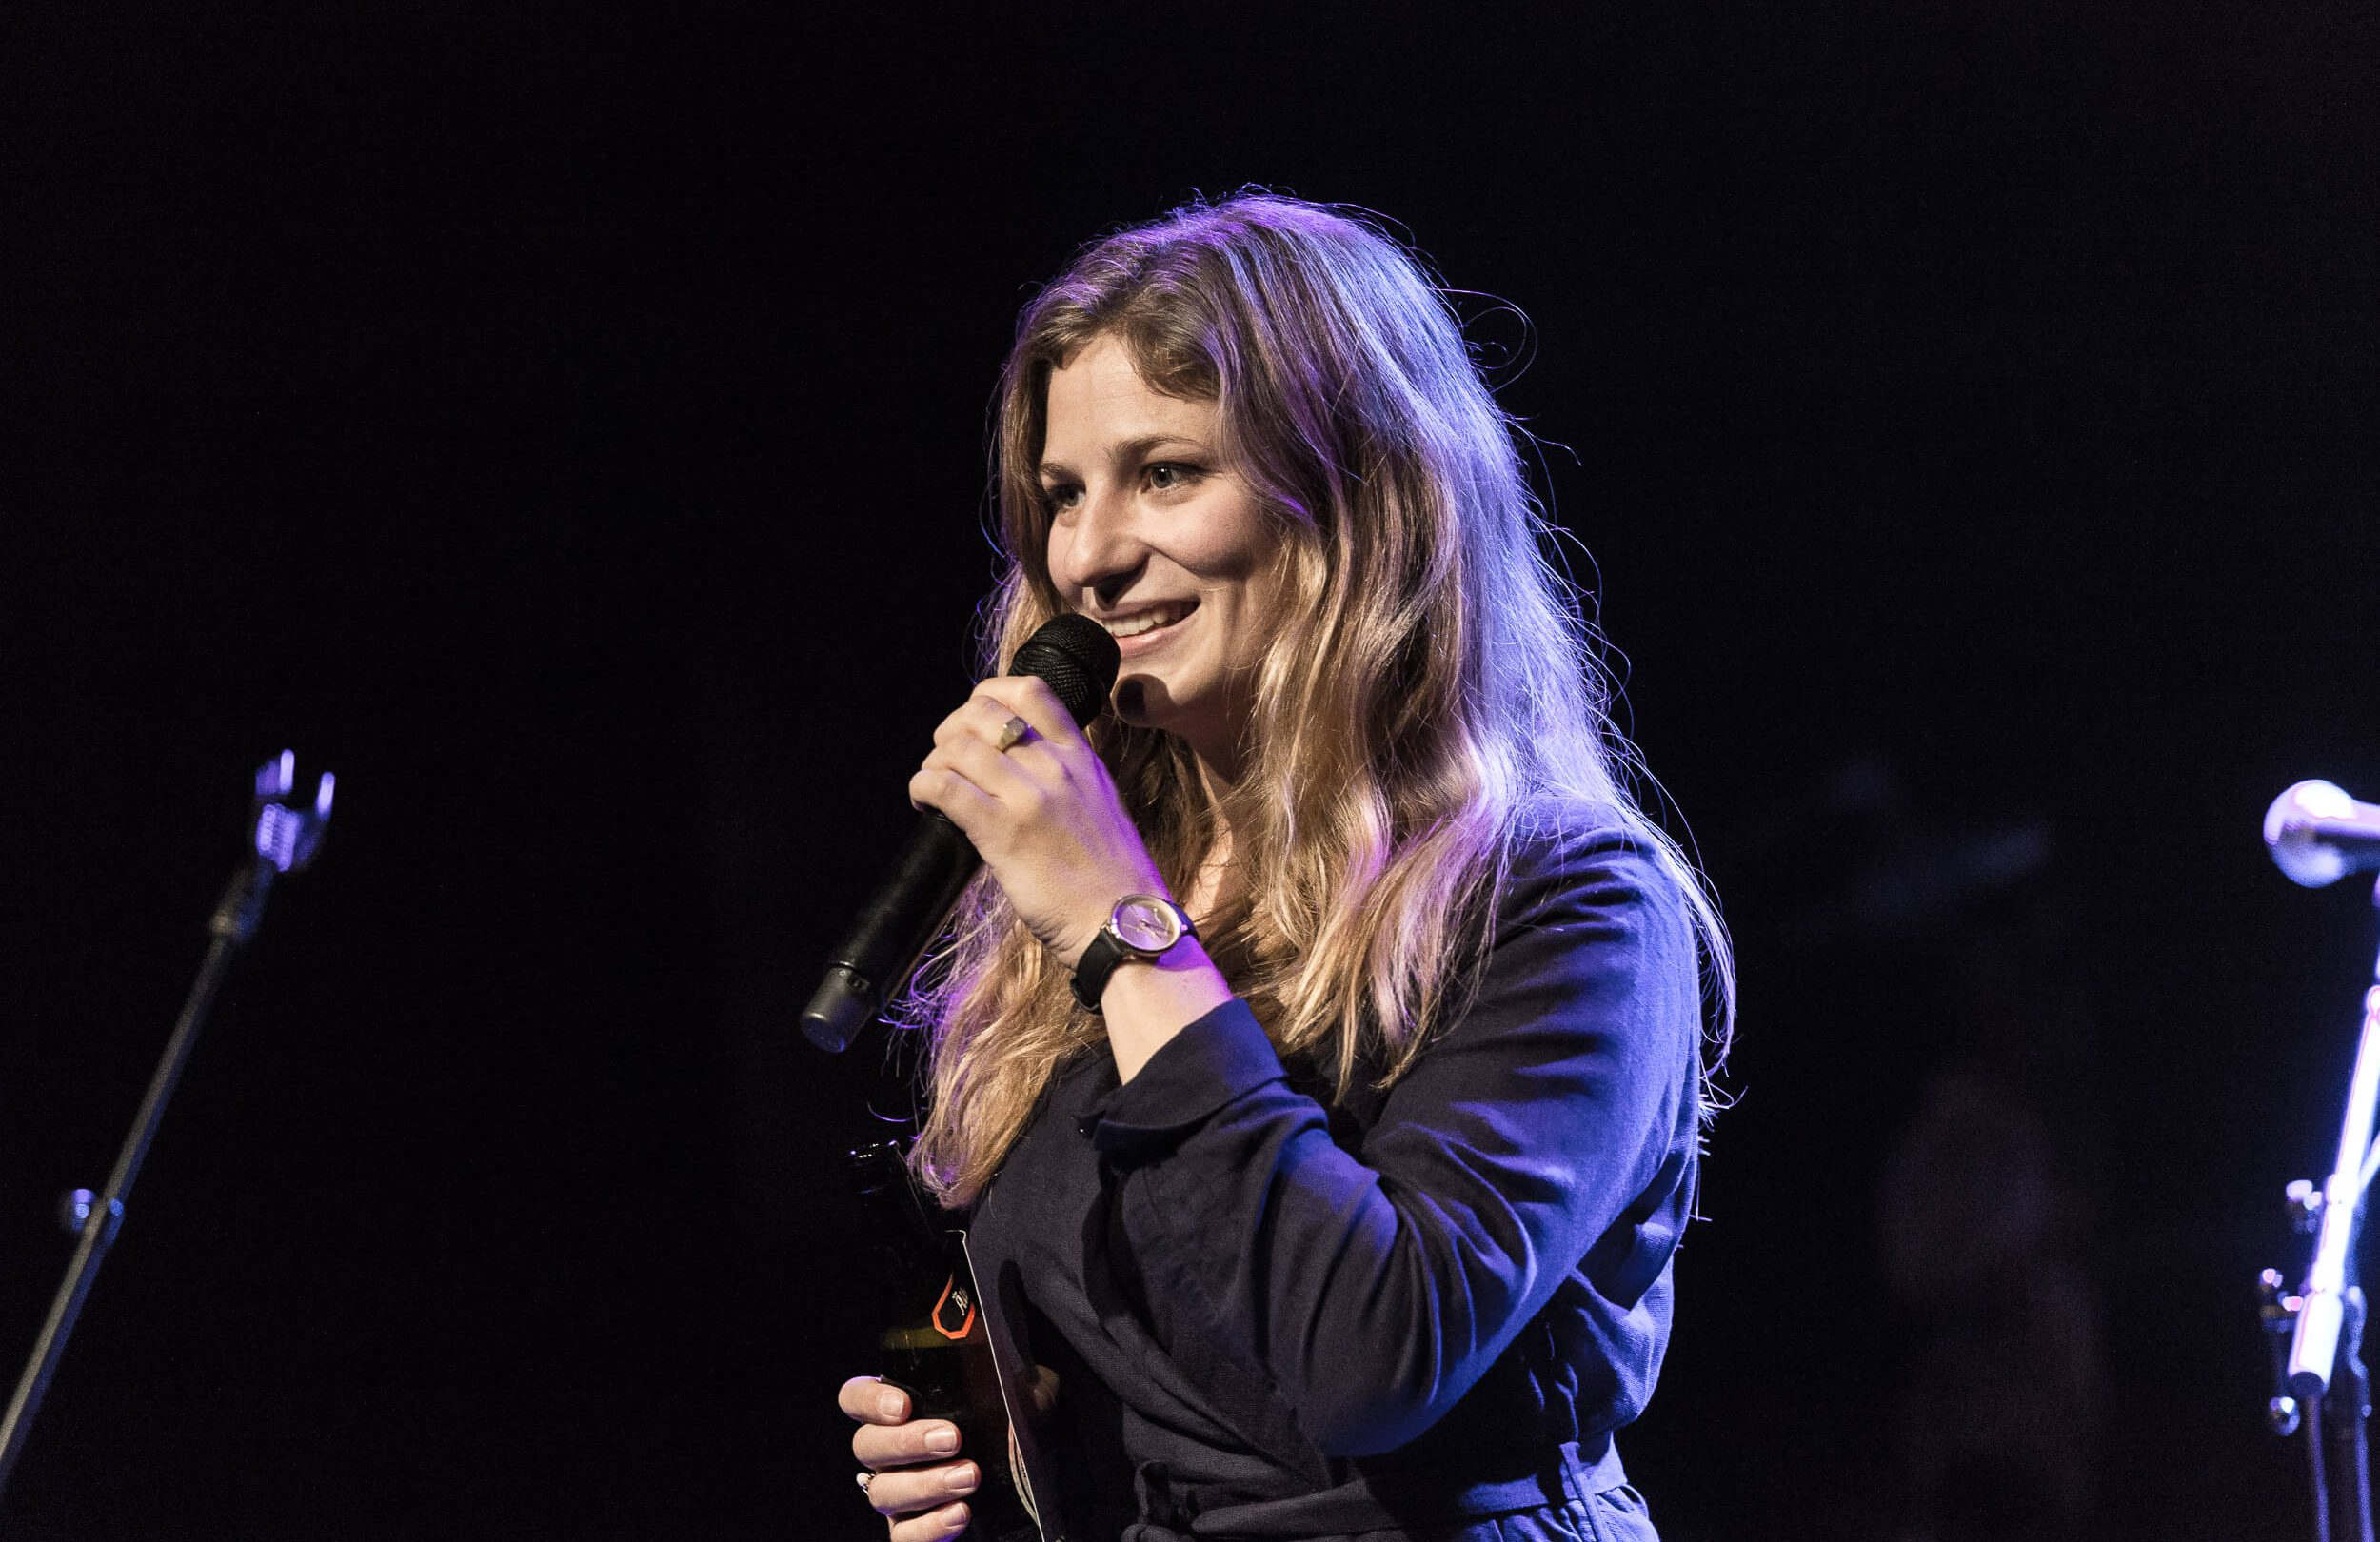 En kvinde synger i en mikrofon på scenen under et Kulturpolitisk arrangement.